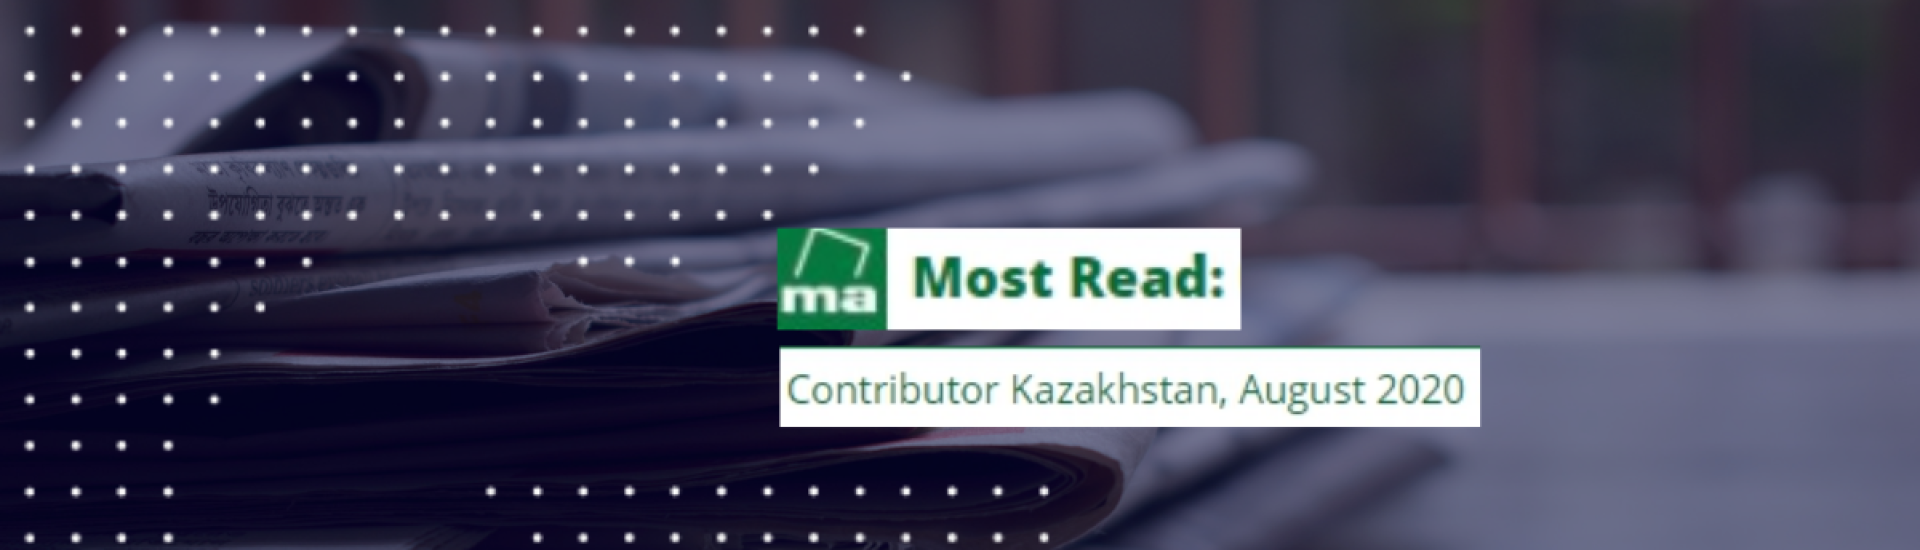 GRATA International Казахстан получила награду за самого читаемого автора Mondaq за август